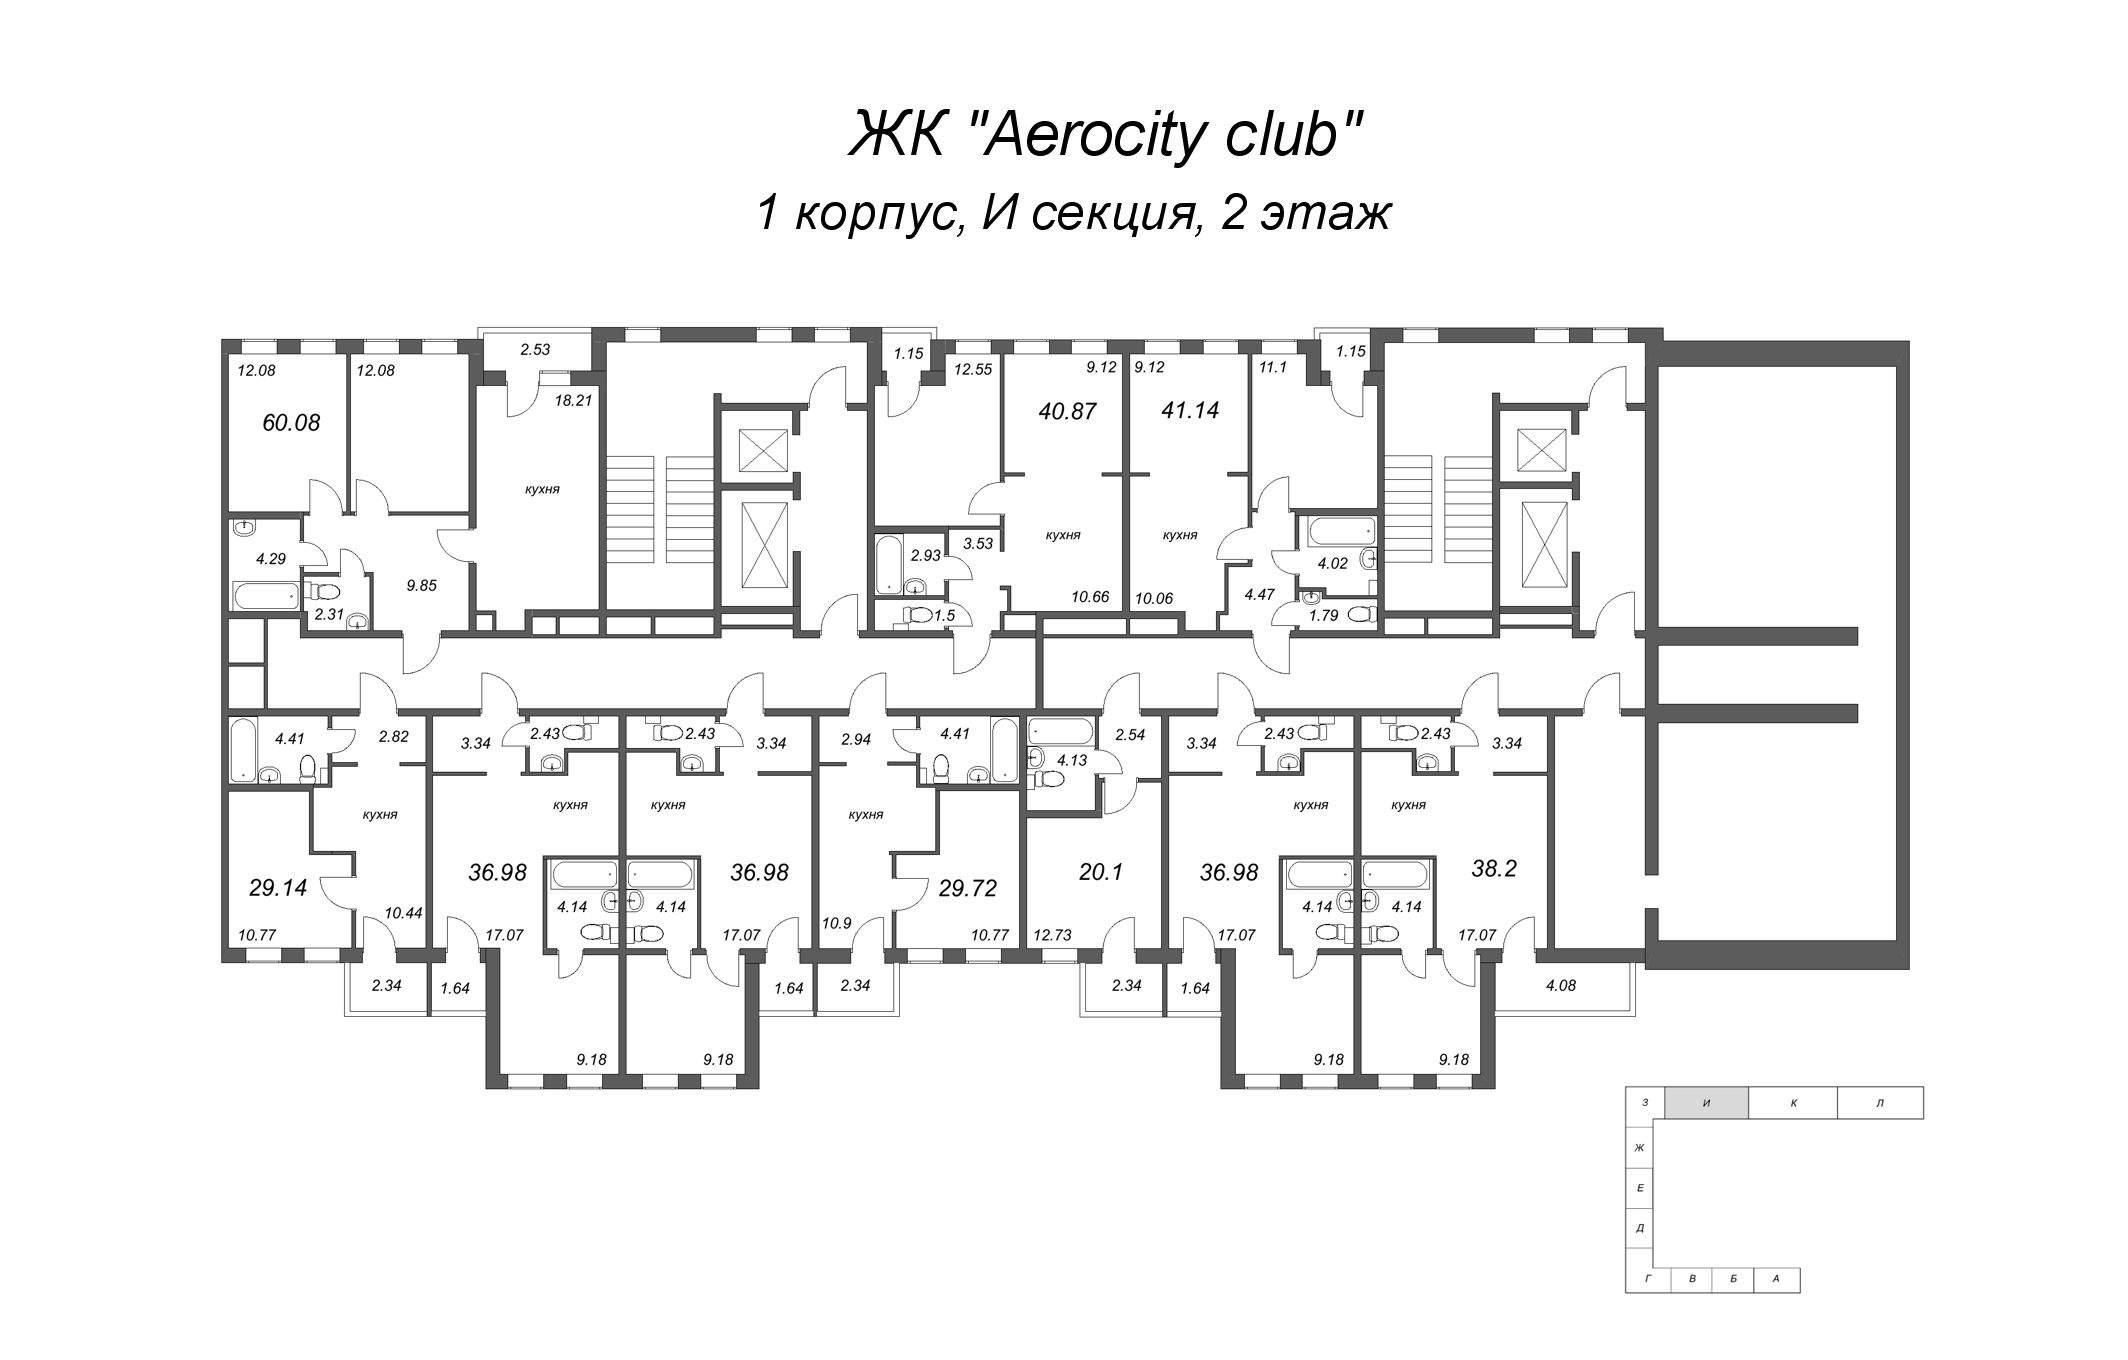 2-комнатная (Евро) квартира, 40.87 м² - планировка этажа